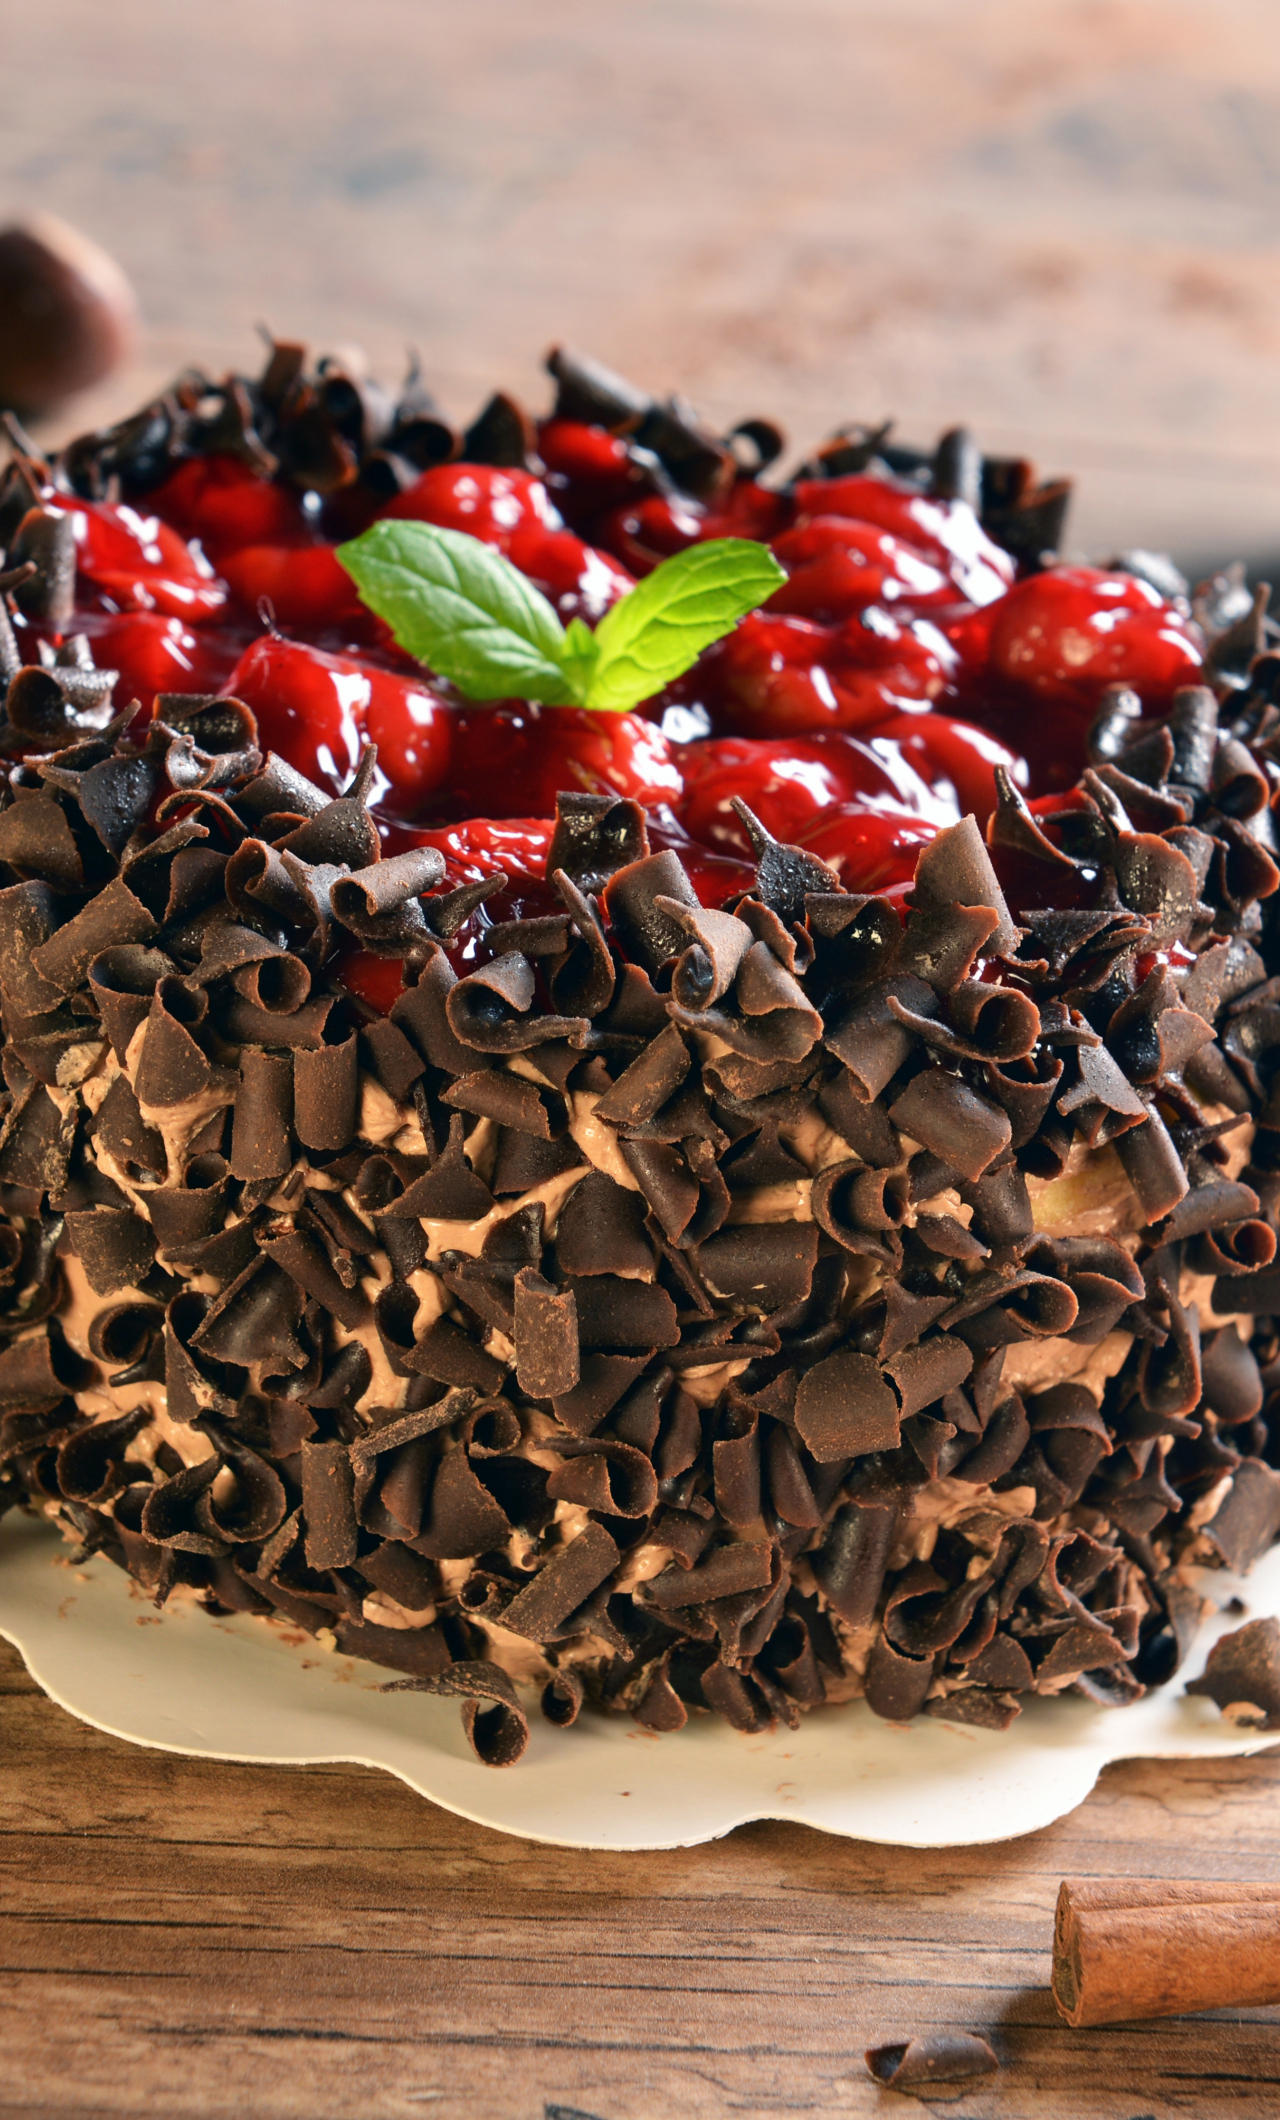 chocolate cake wallpaper